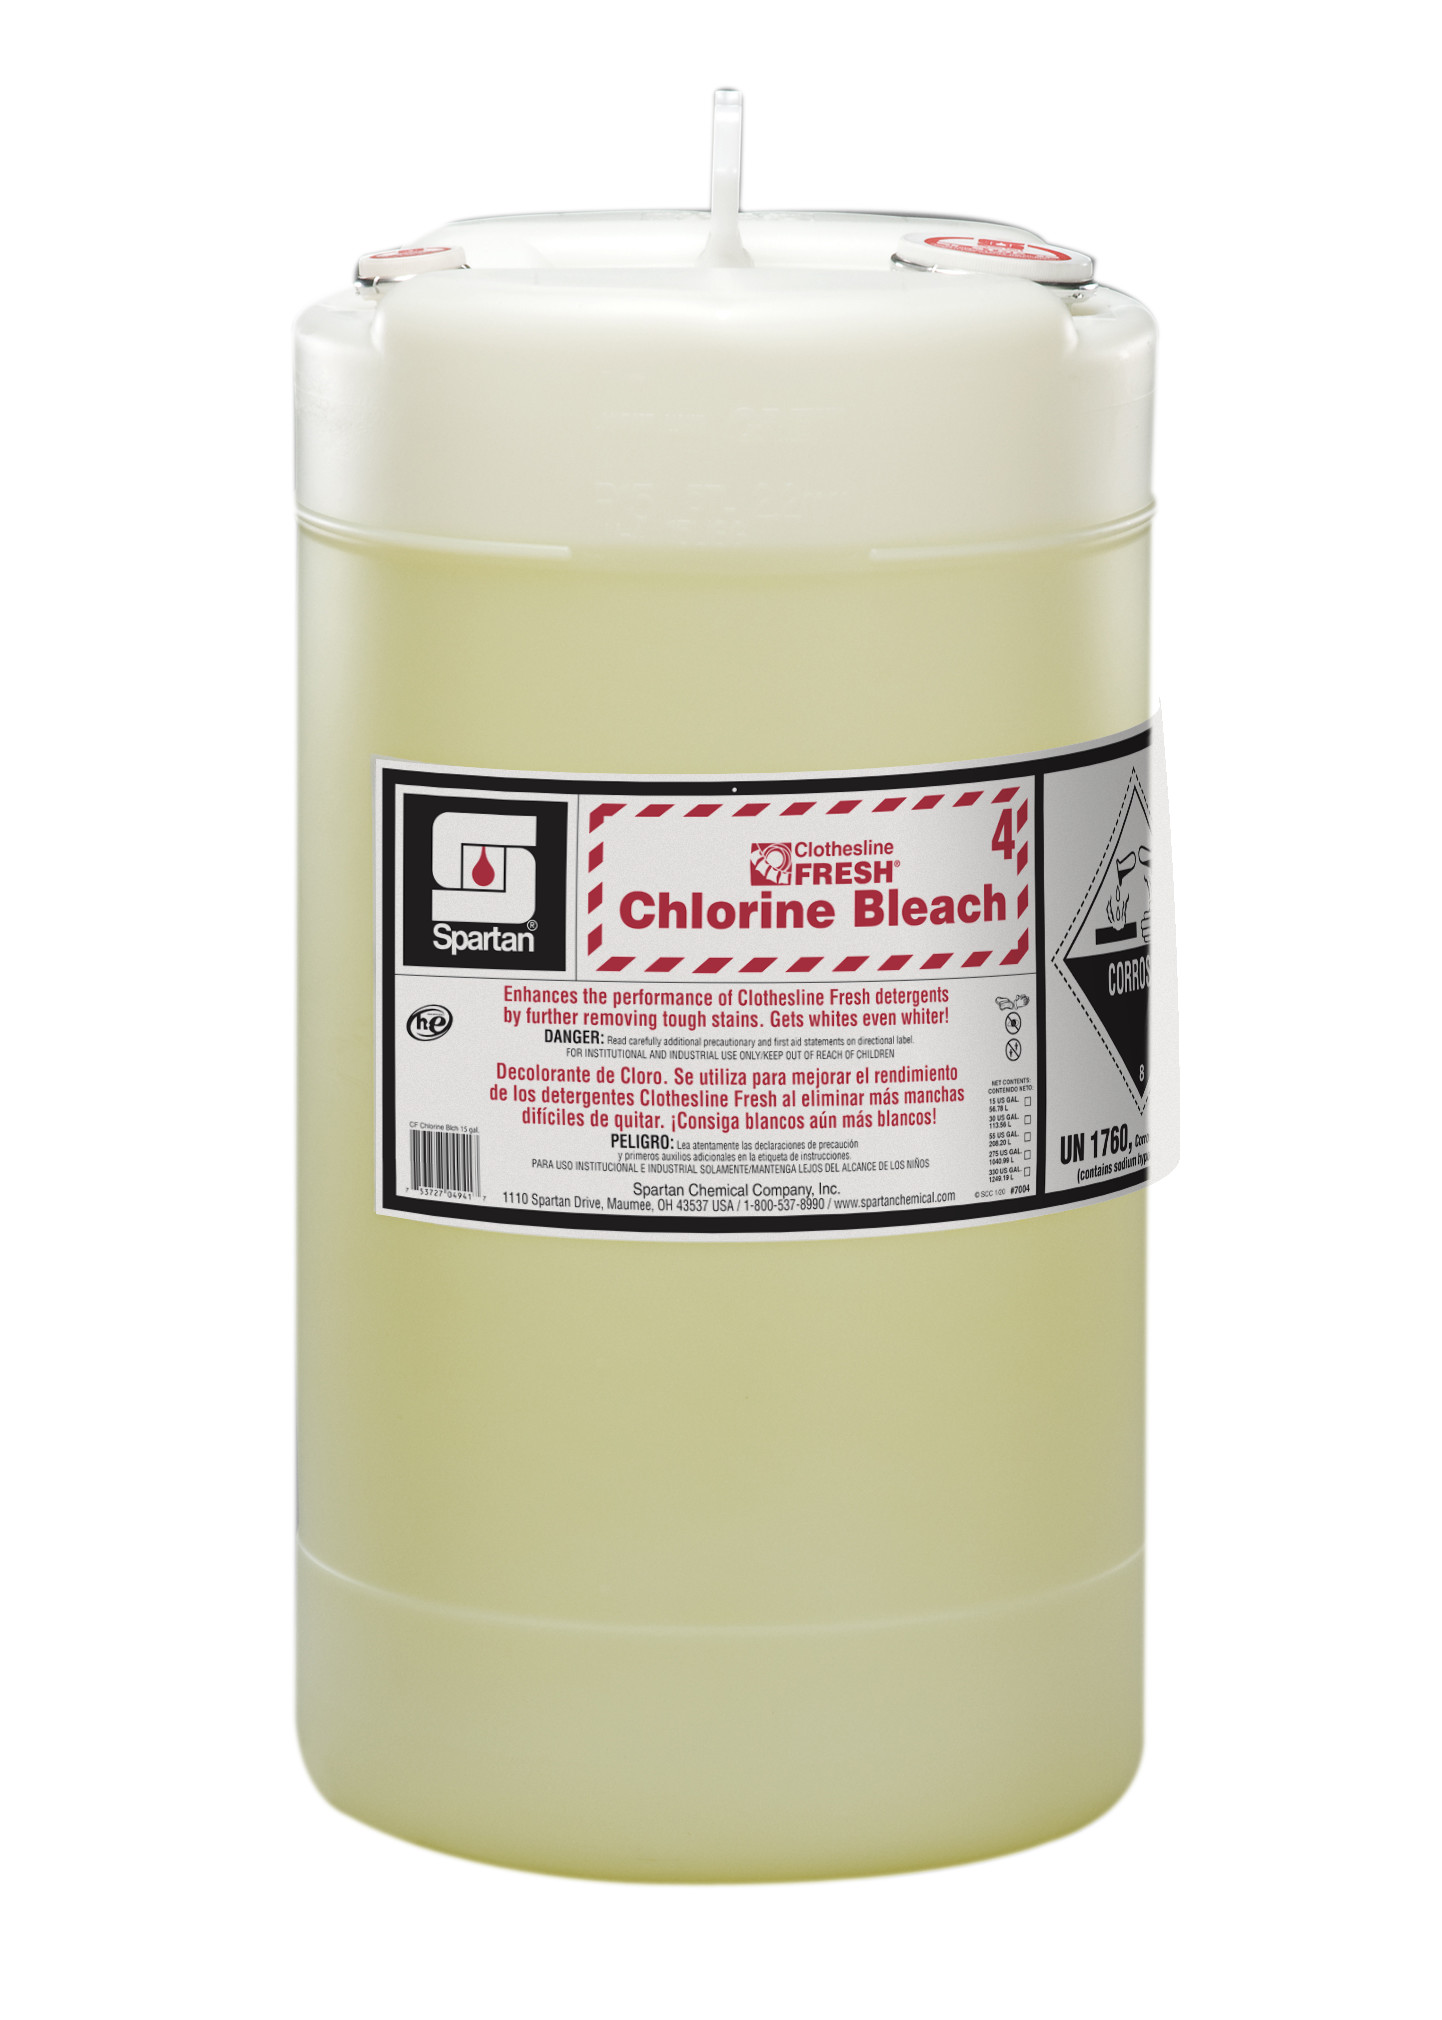 Spartan Chemical Company Clothesline Fresh Chlorine Bleach 4, 15 GAL DRUM